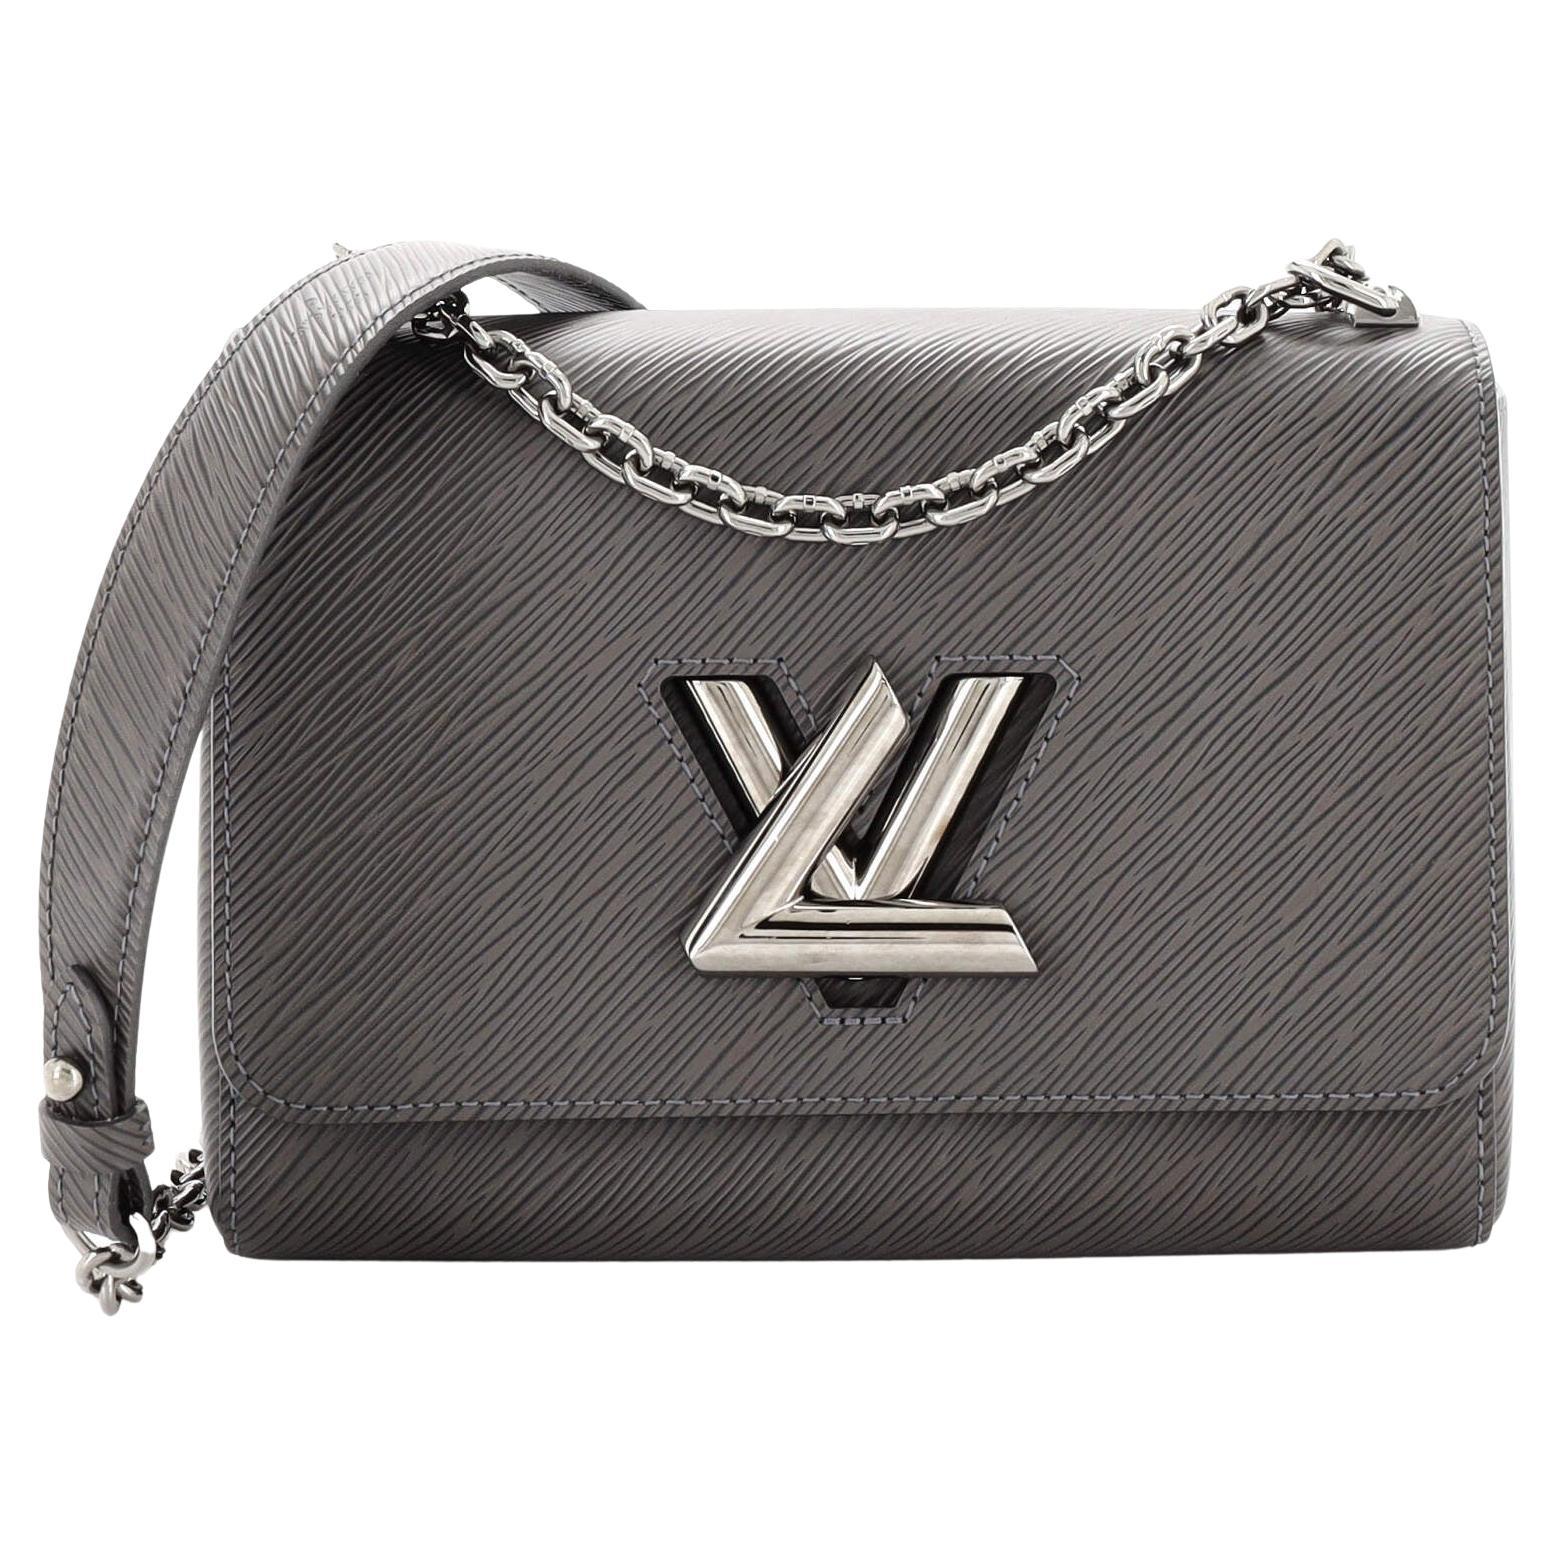 Louis Vuitton Twist Mm - 10 For Sale on 1stDibs  louis vuitton twist mm  price, louis vuitton twist mm limited edition, lv twist mm black